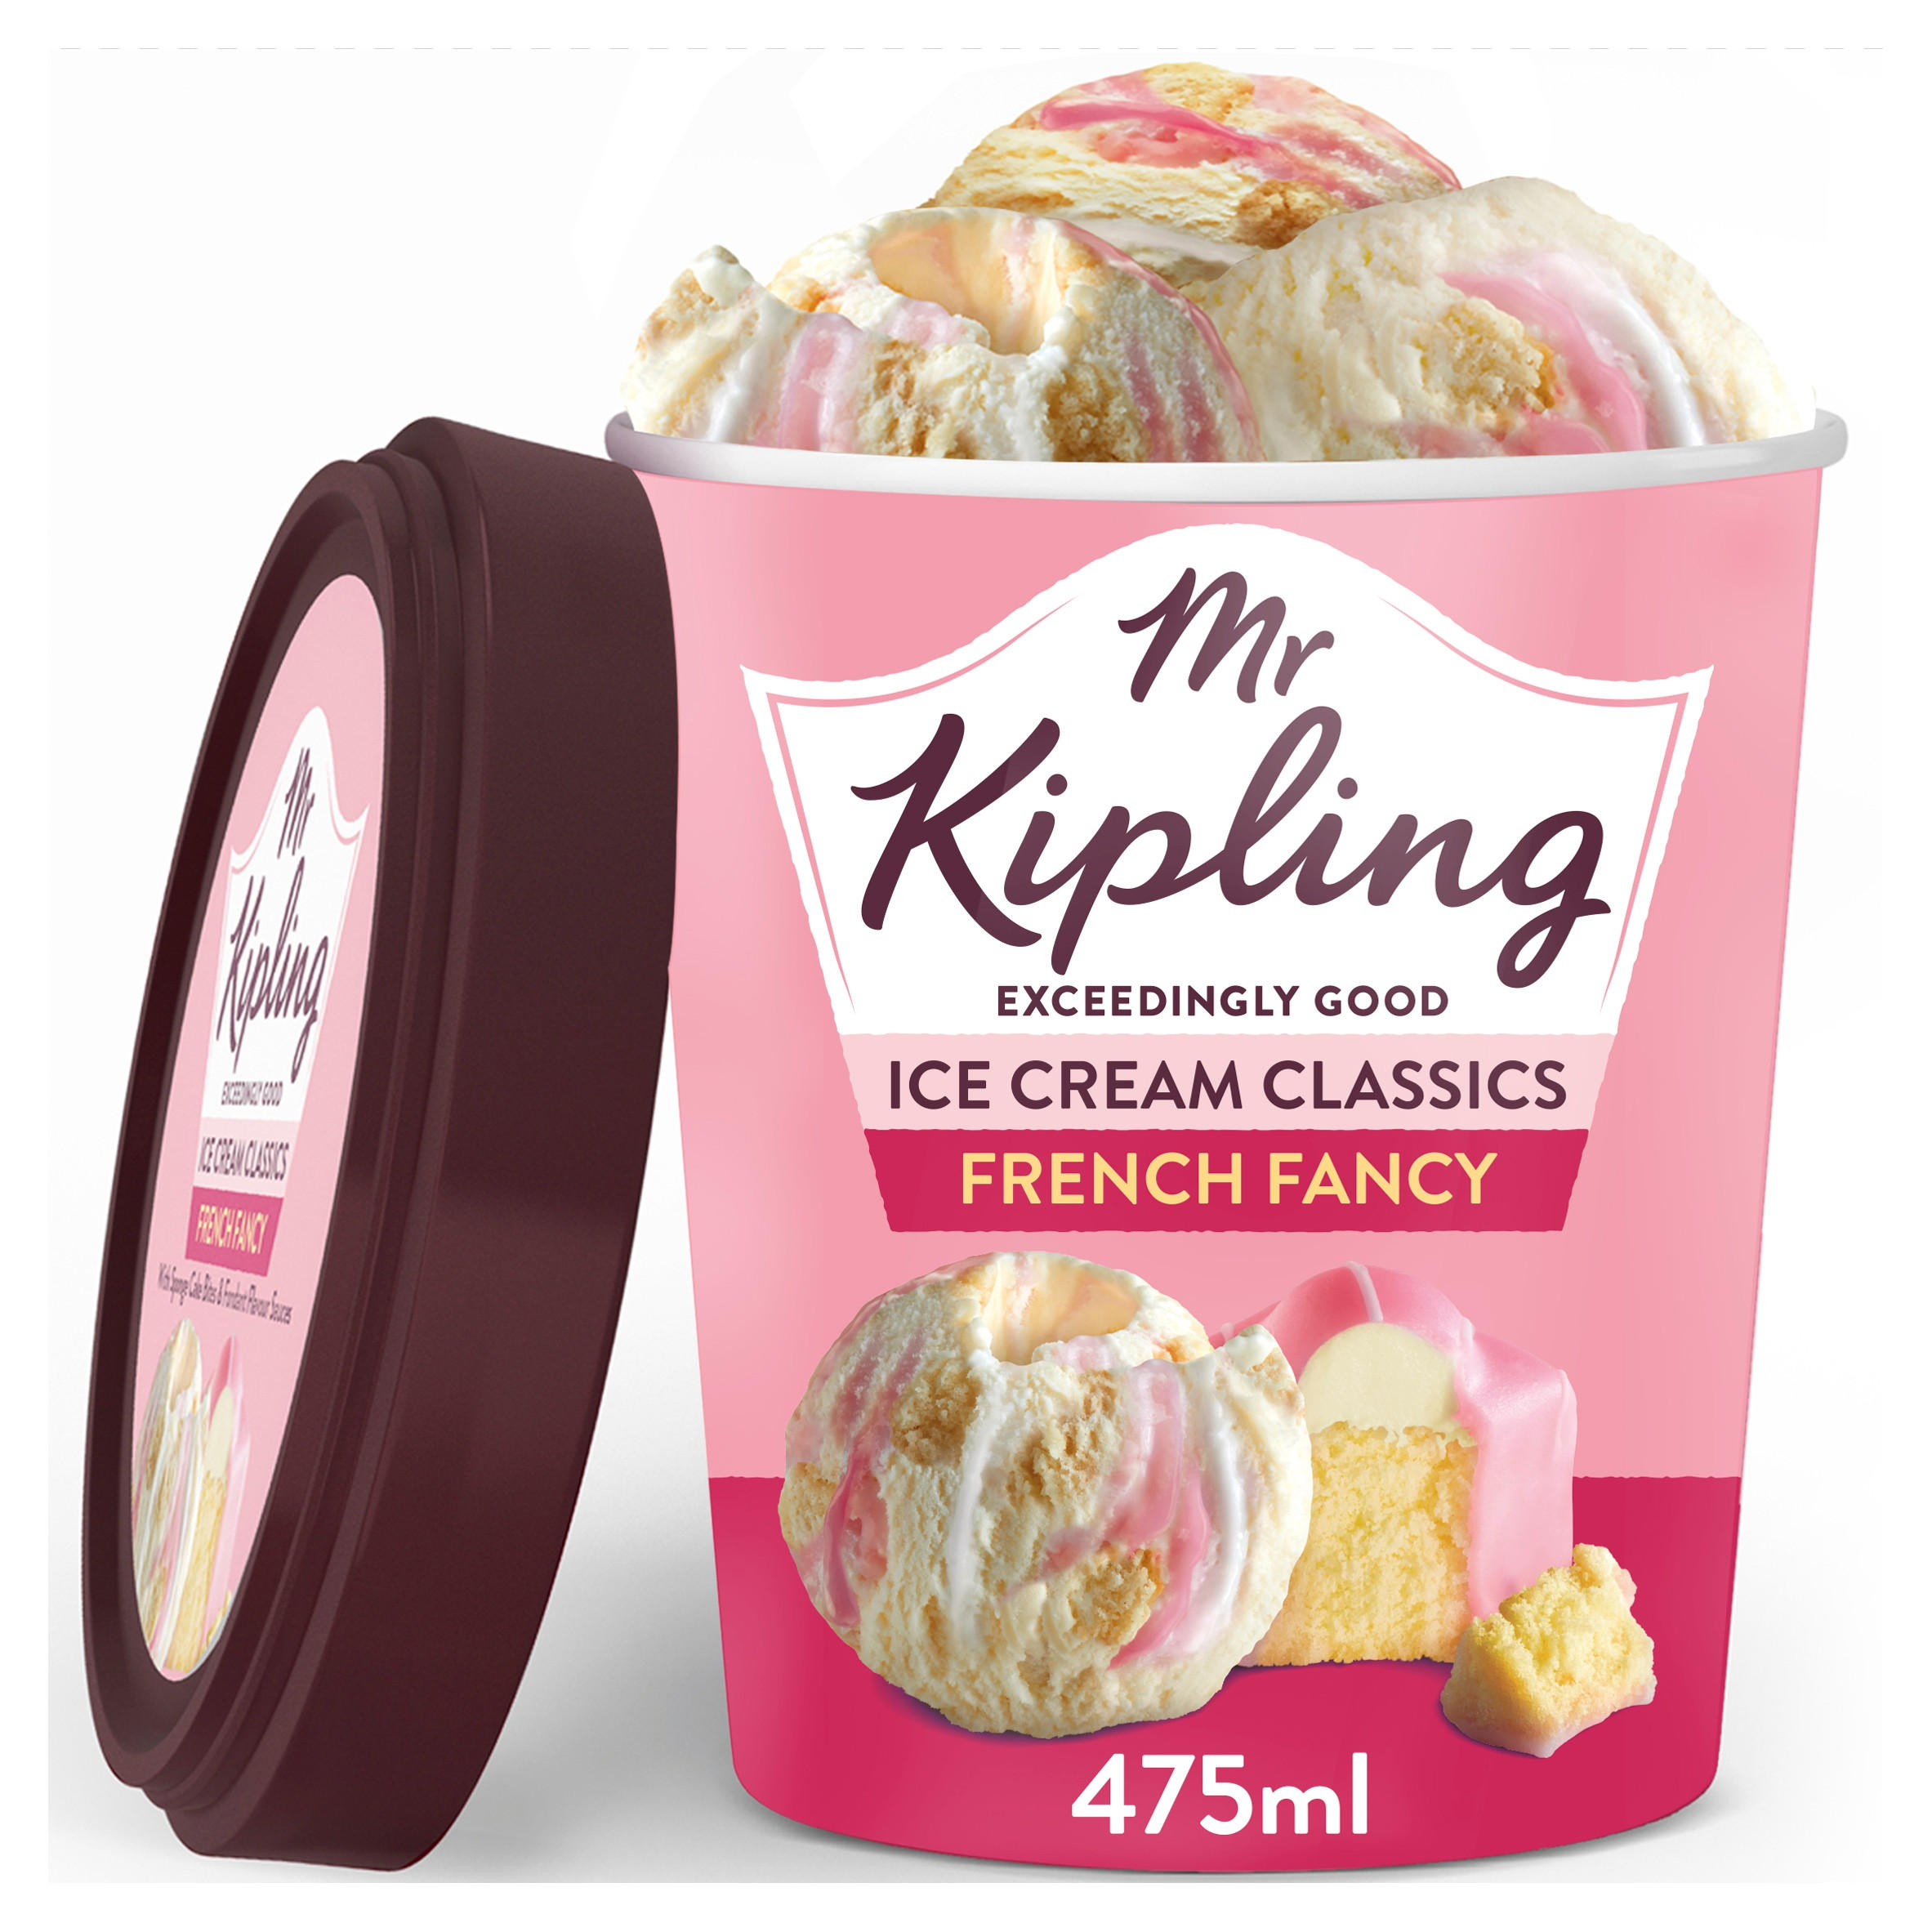 Mr Kipling Ice Cream Classics French Fancy 475ml